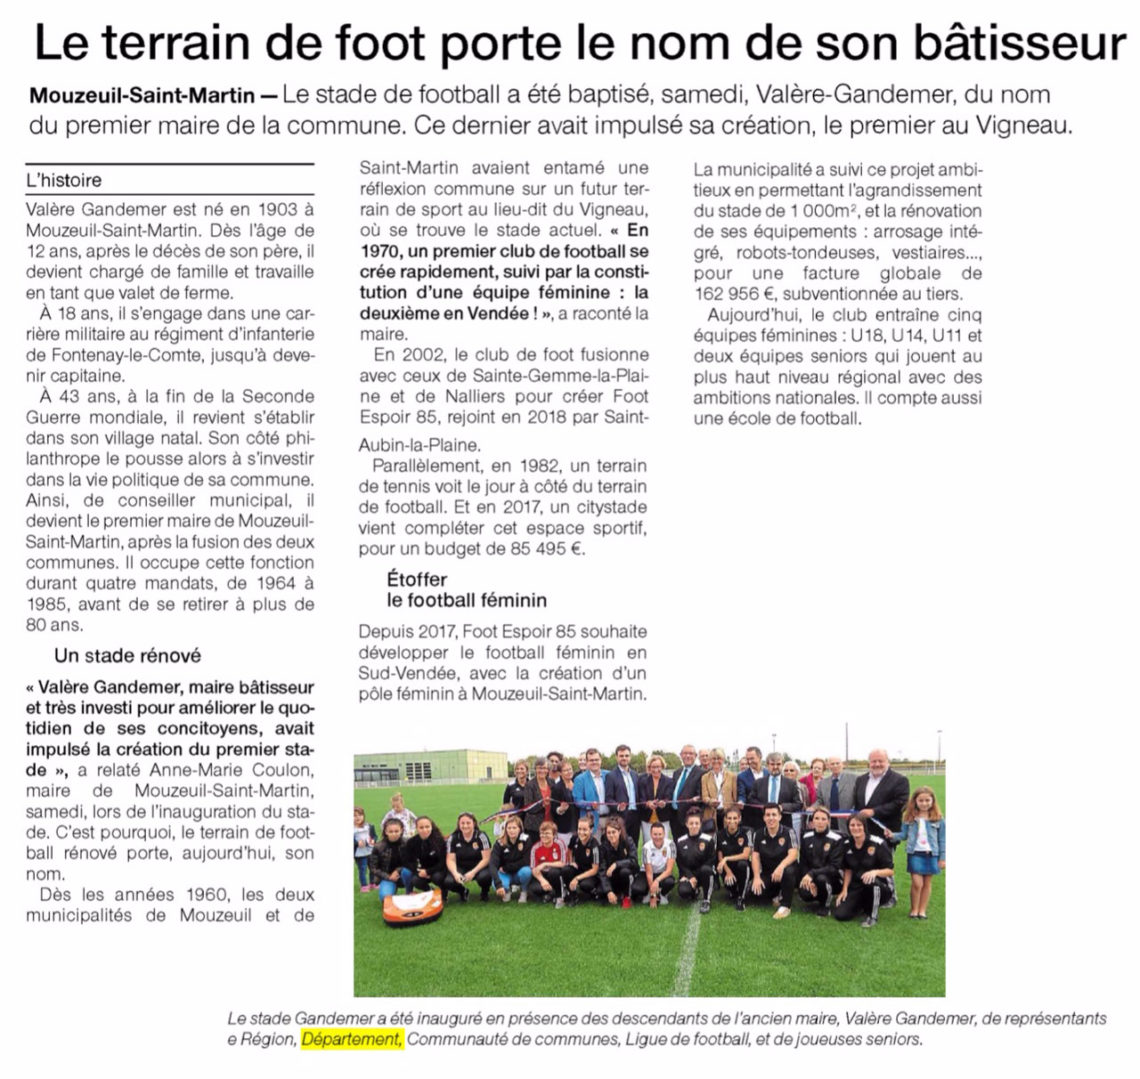 Inauguration du terrain de foot de Mouzeuil-Saint-Martin